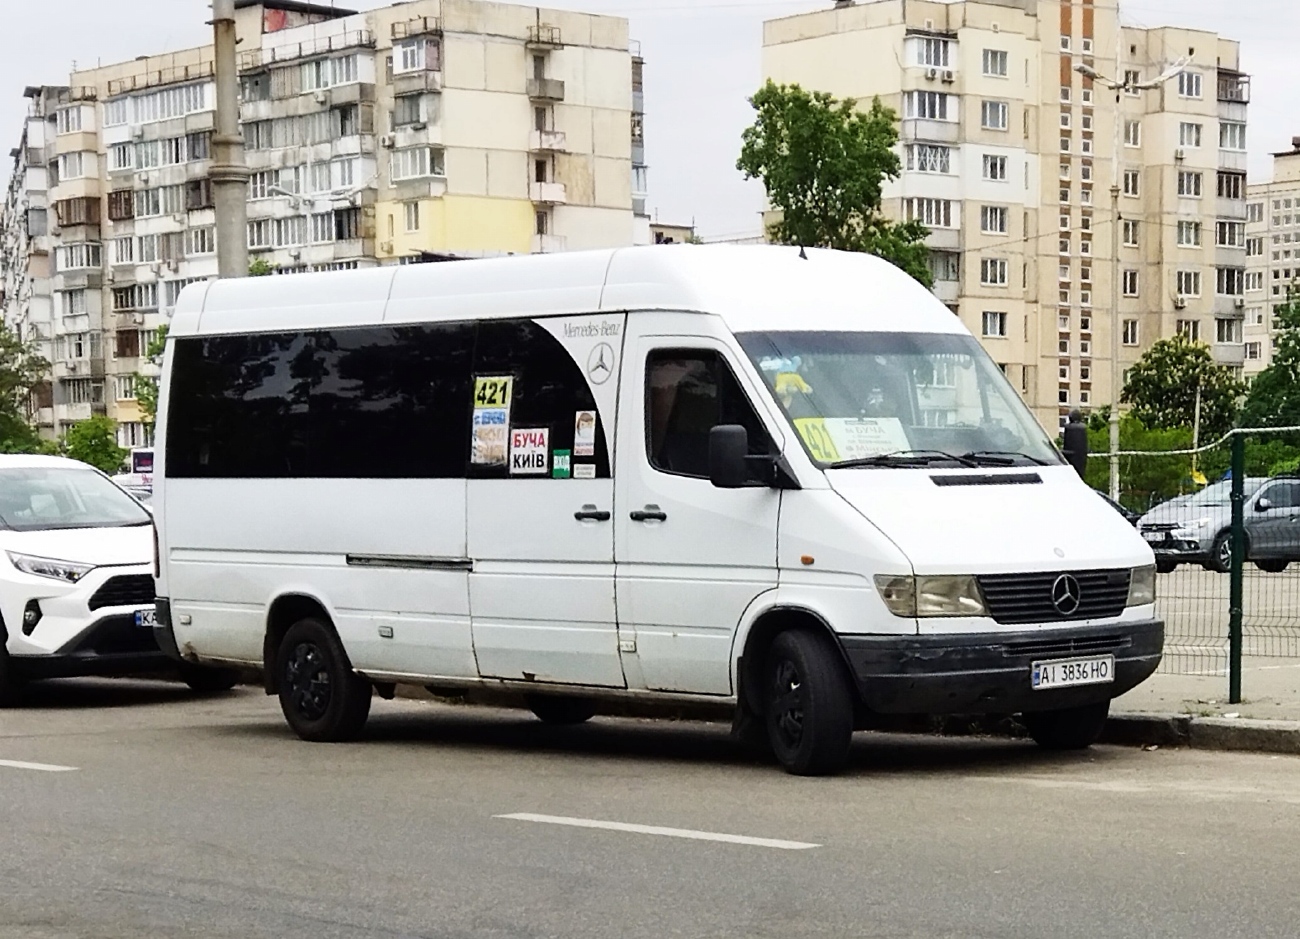 Kyiv region, Mercedes-Benz Sprinter W903 312D Nr. AI 3836 HO